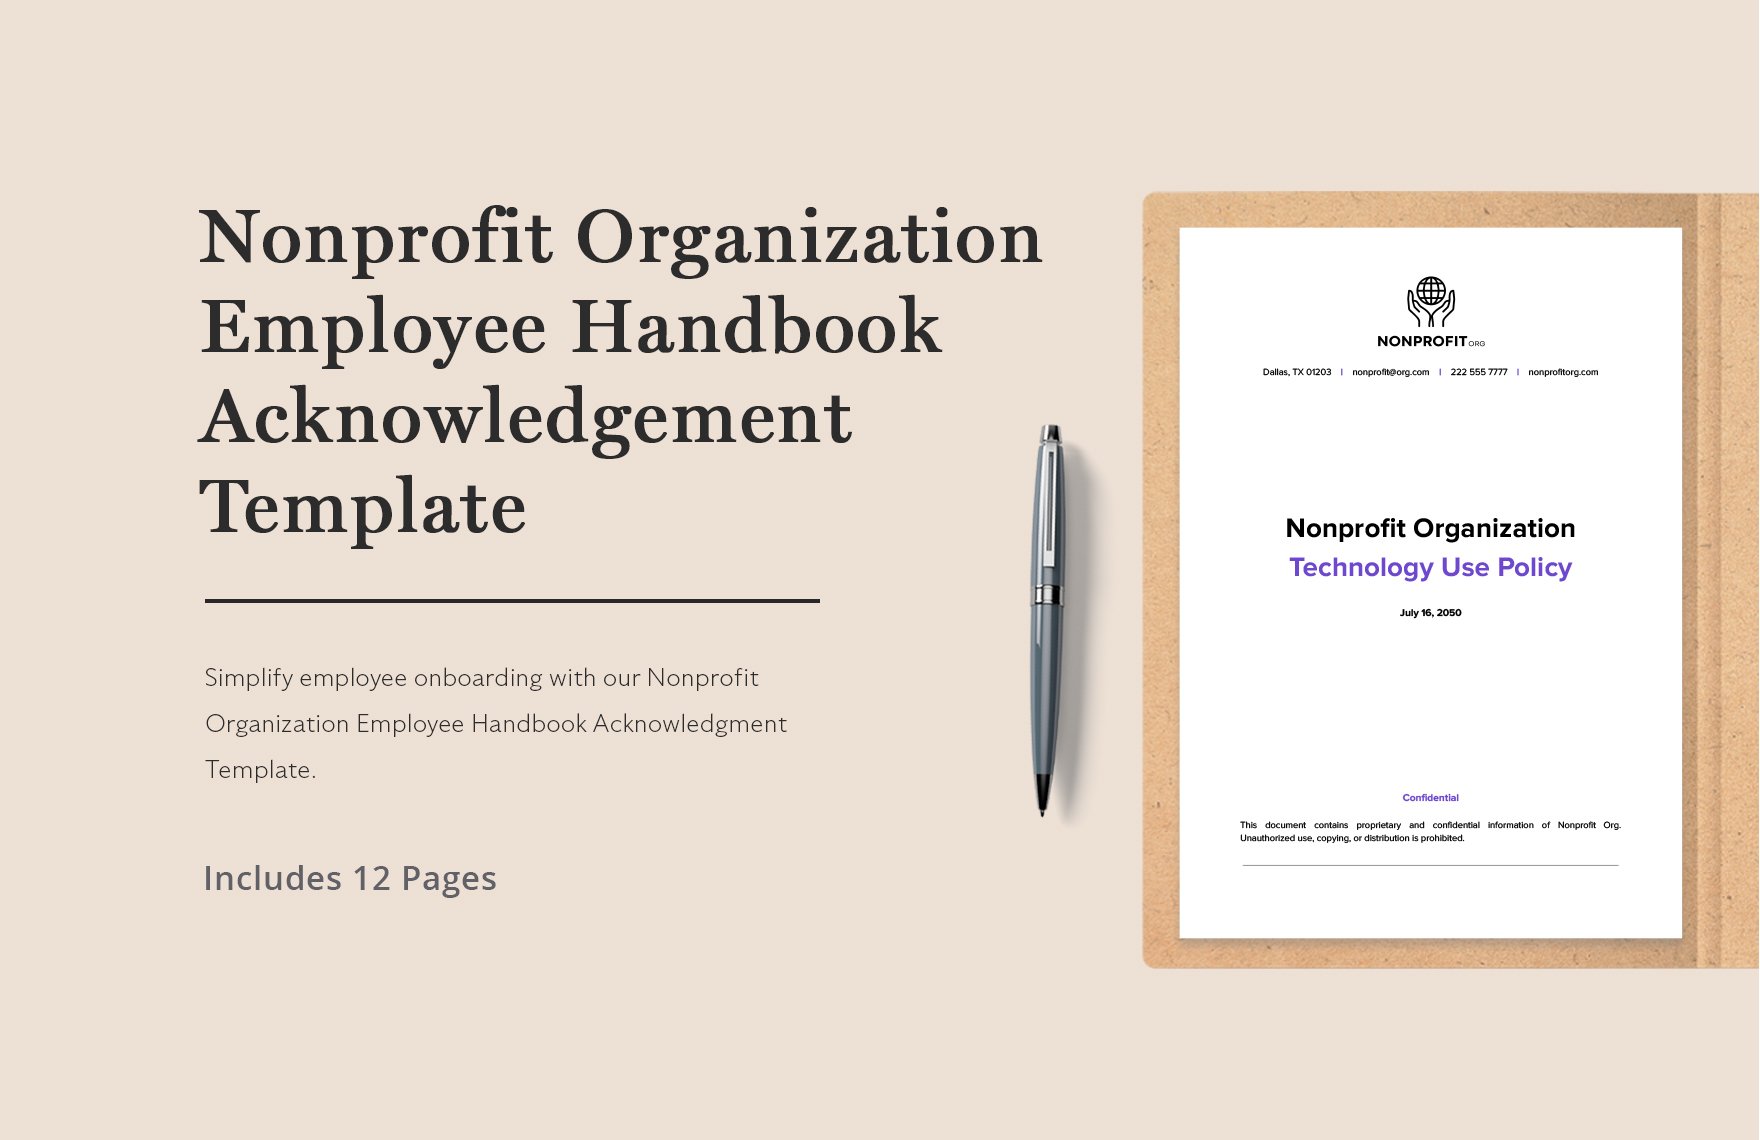 Nonprofit Organization Employee Handbook Acknowledgement Template in